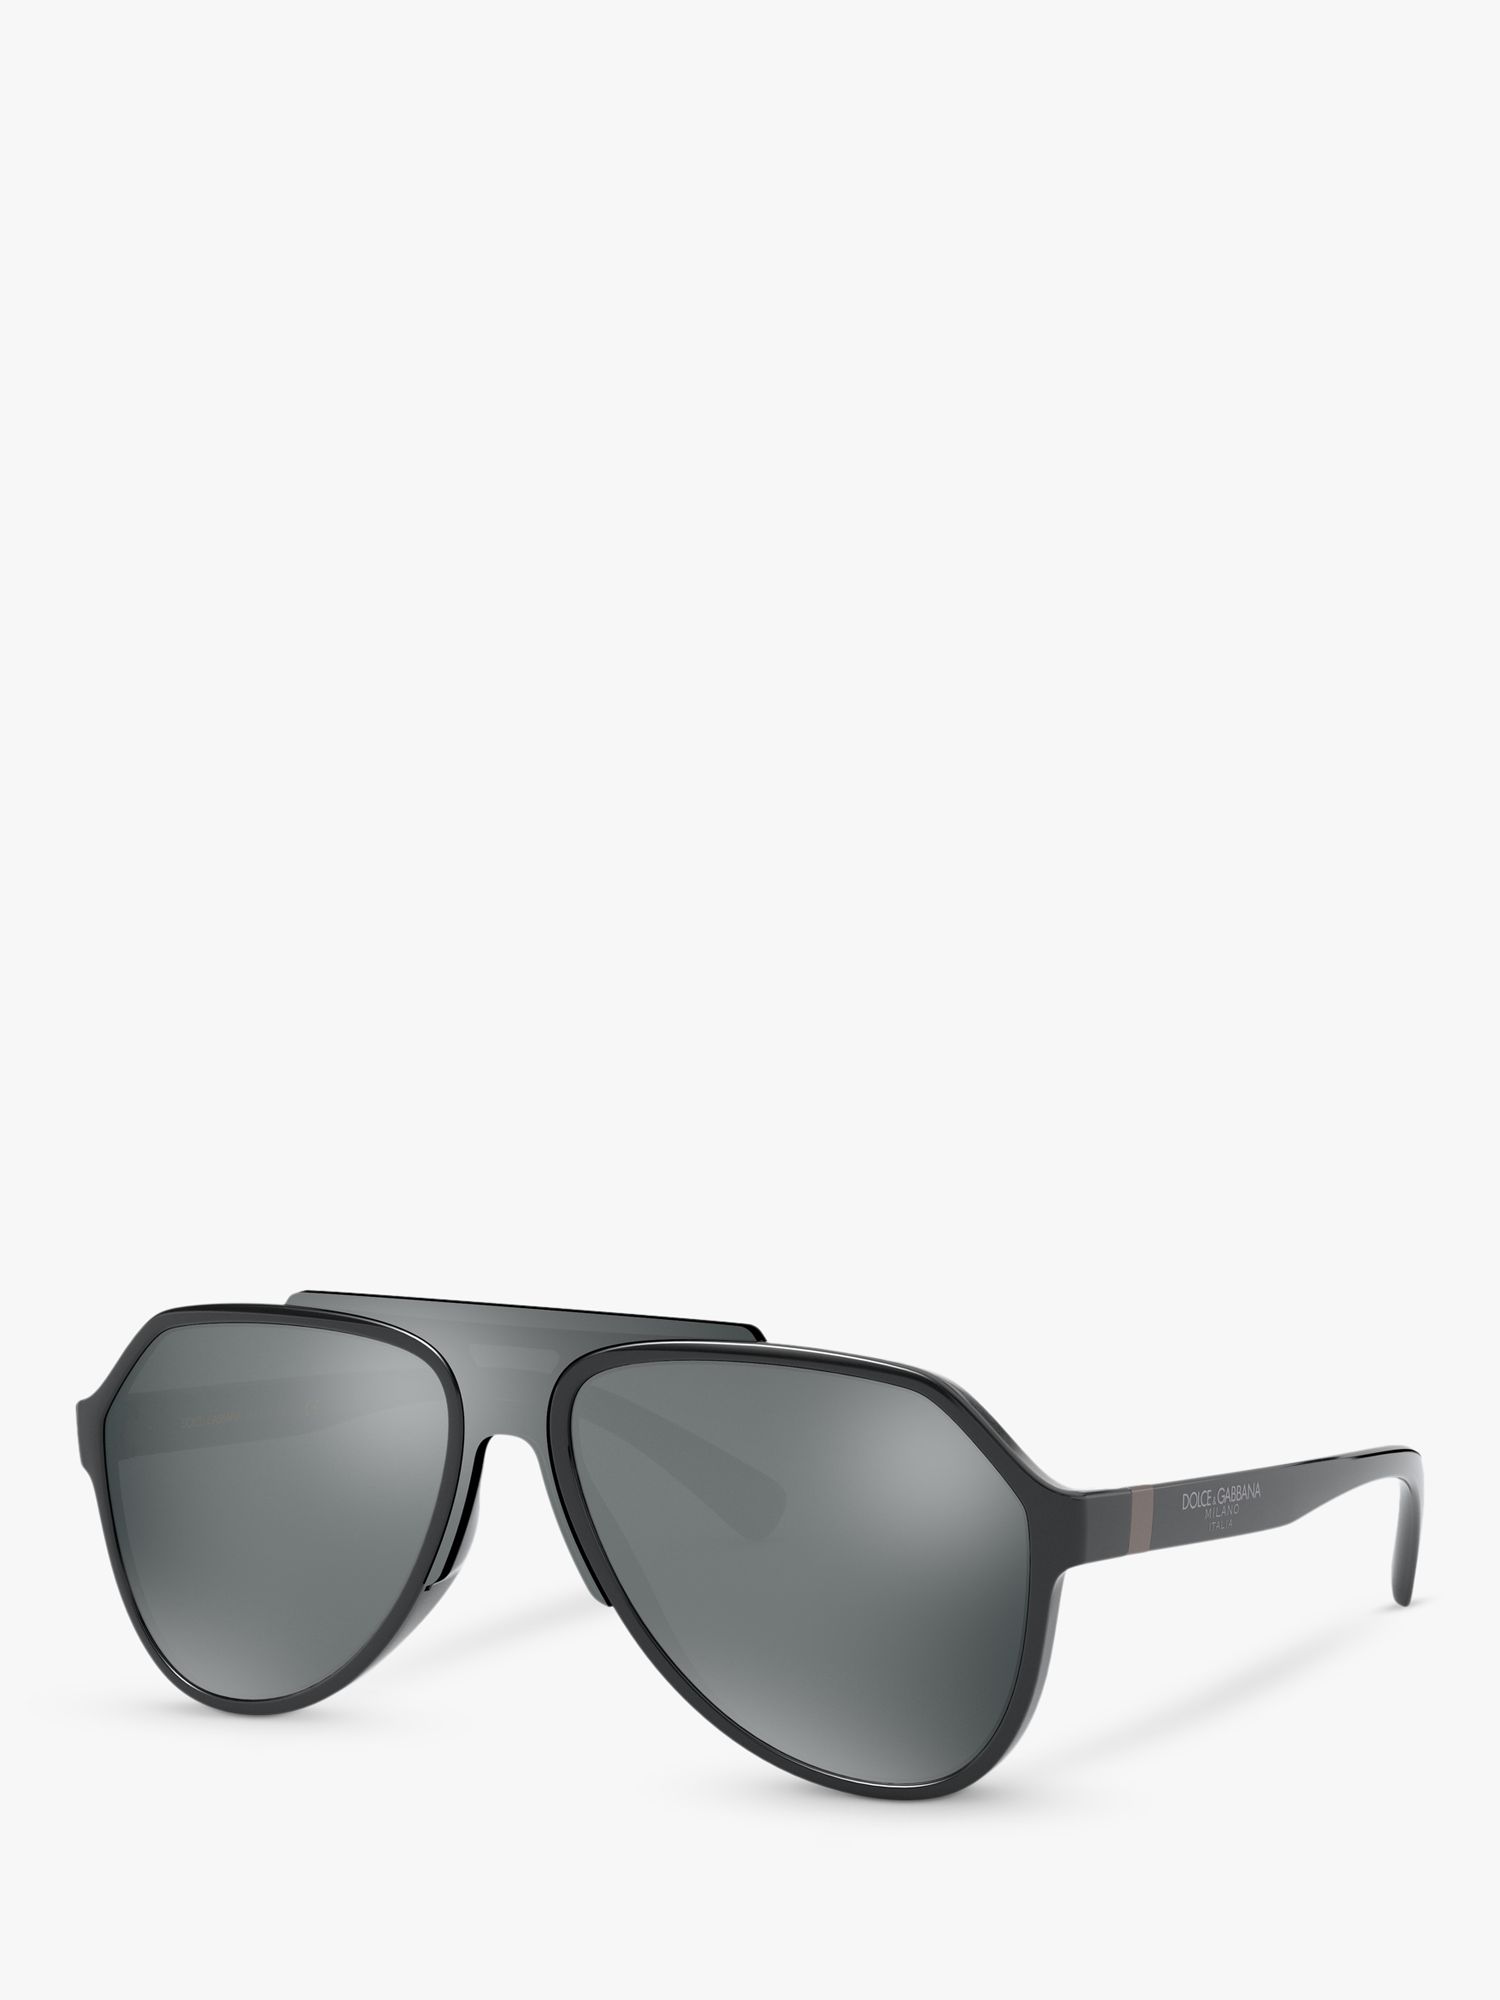 Dolce And Gabbana Dg6128 Mens Aviator Sunglasses